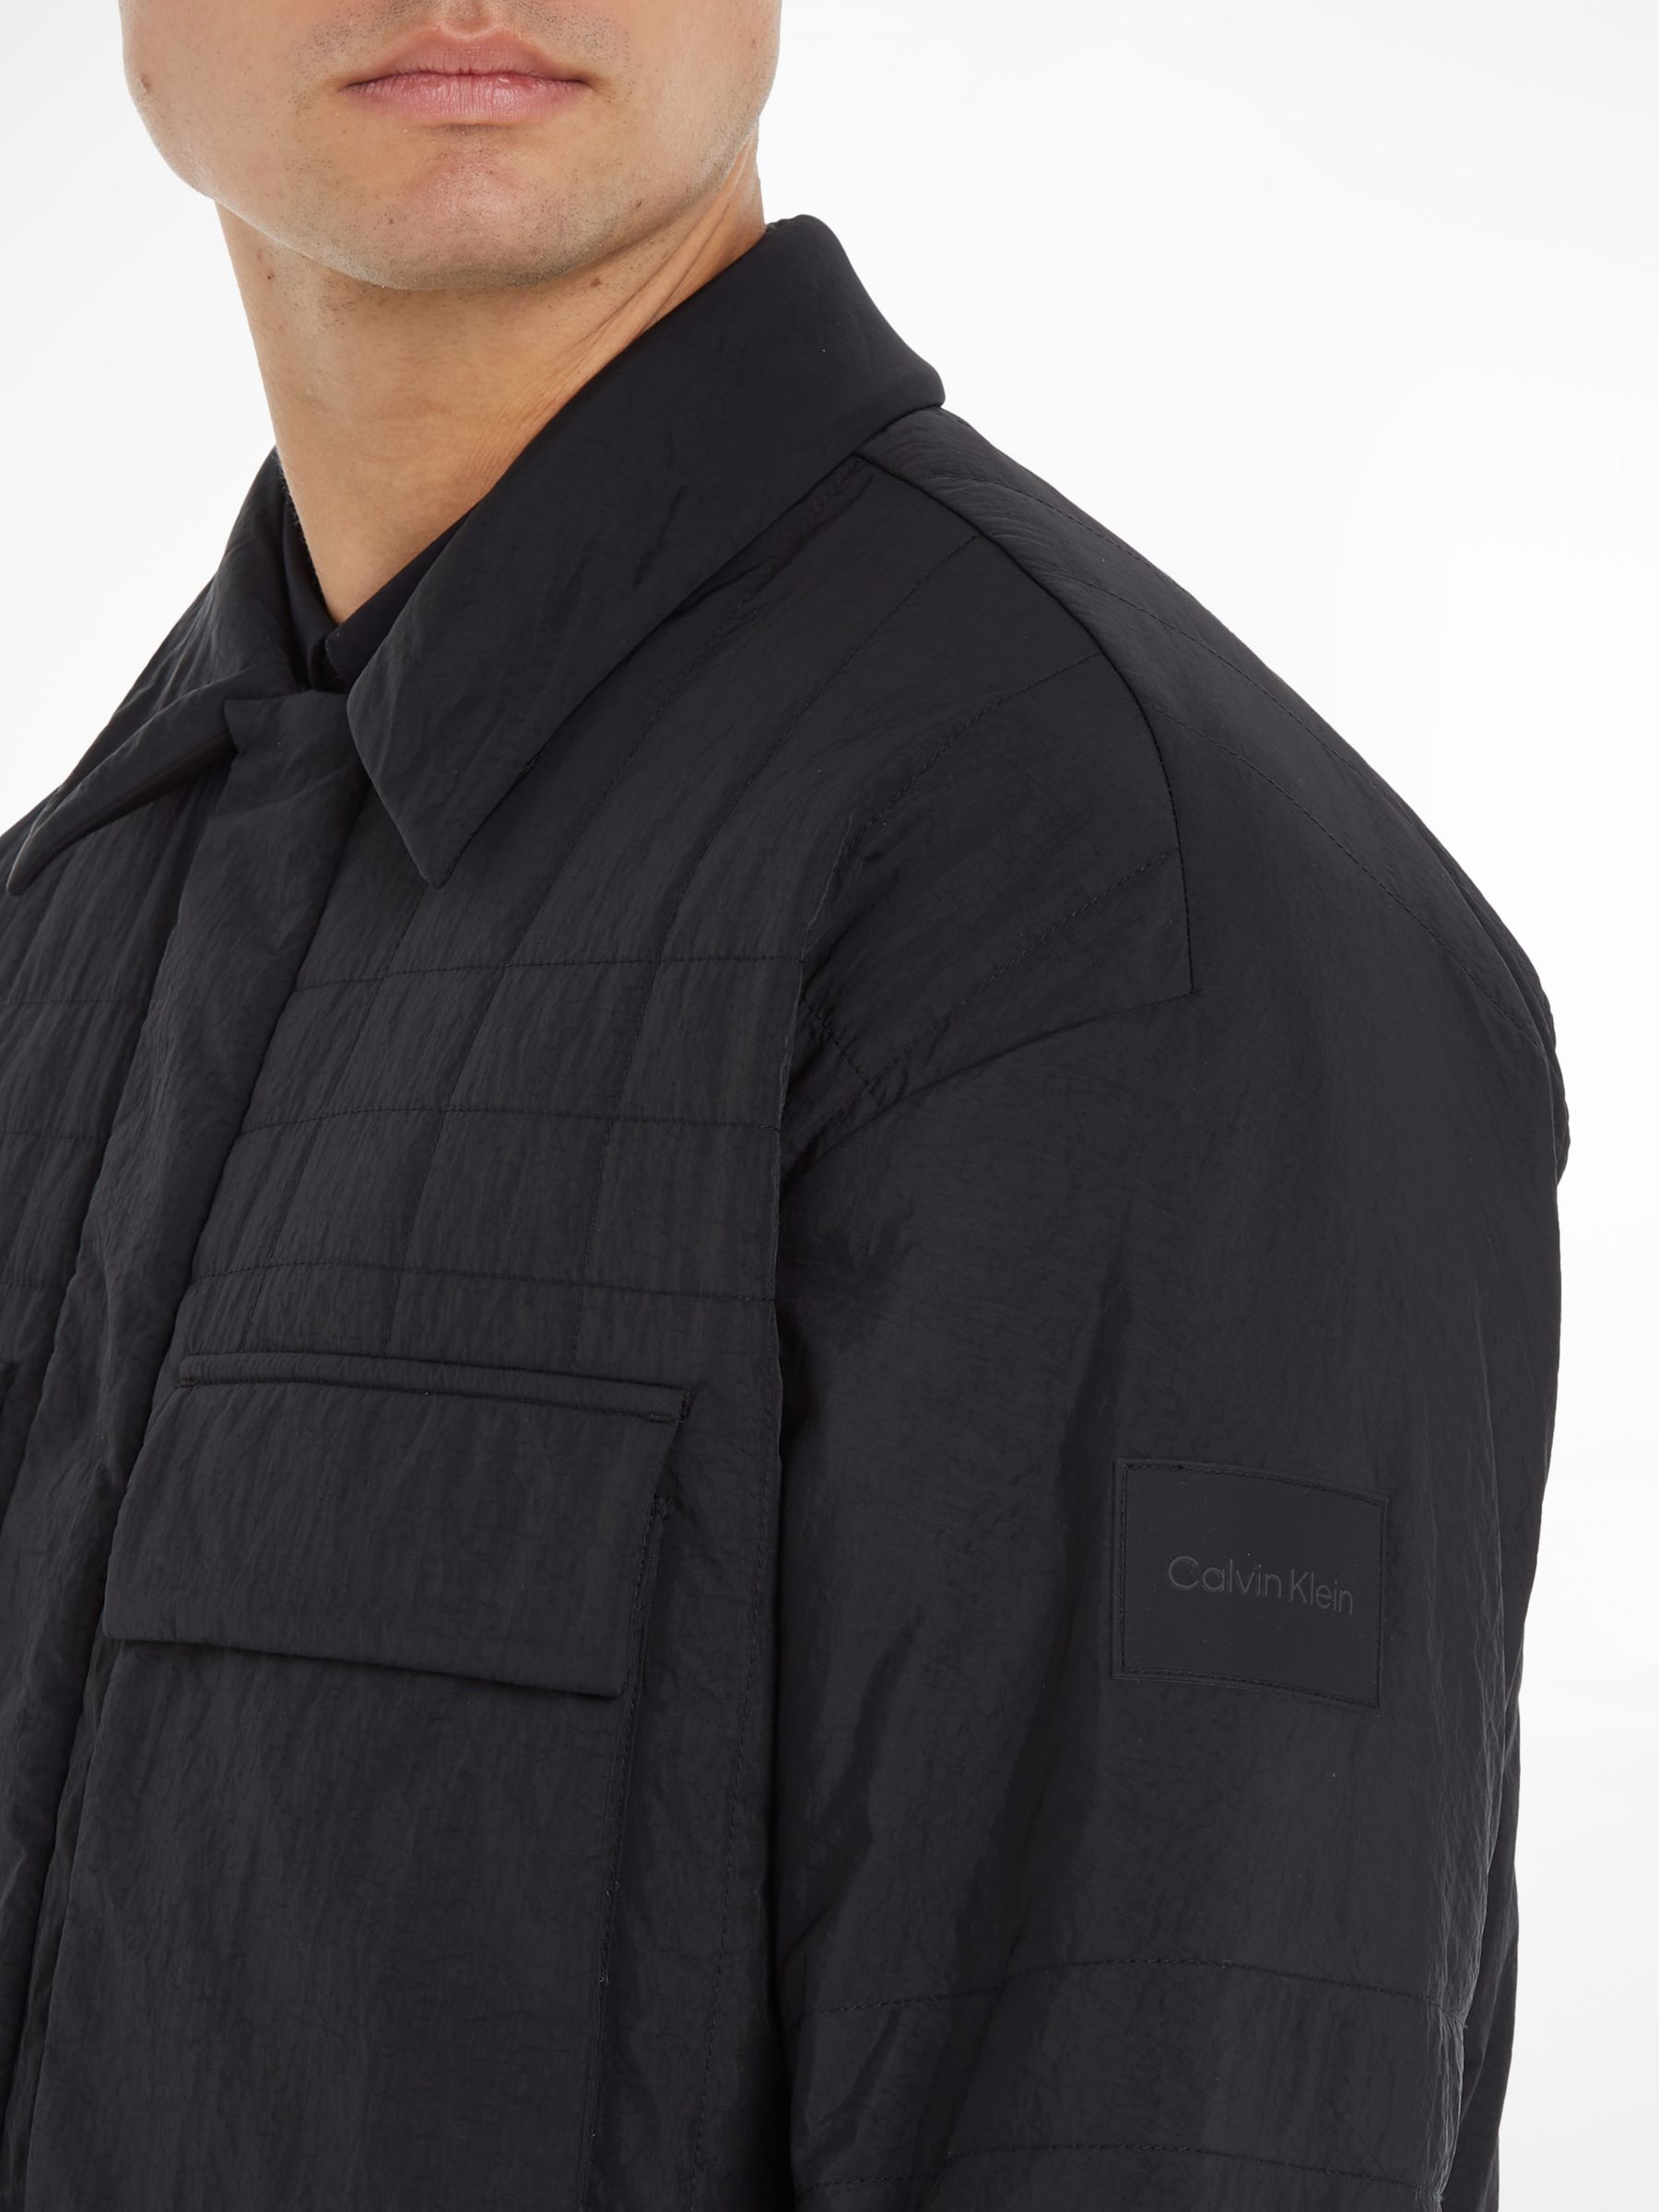 Calvin Klein Quilted Utility Jacket, CK Black, S